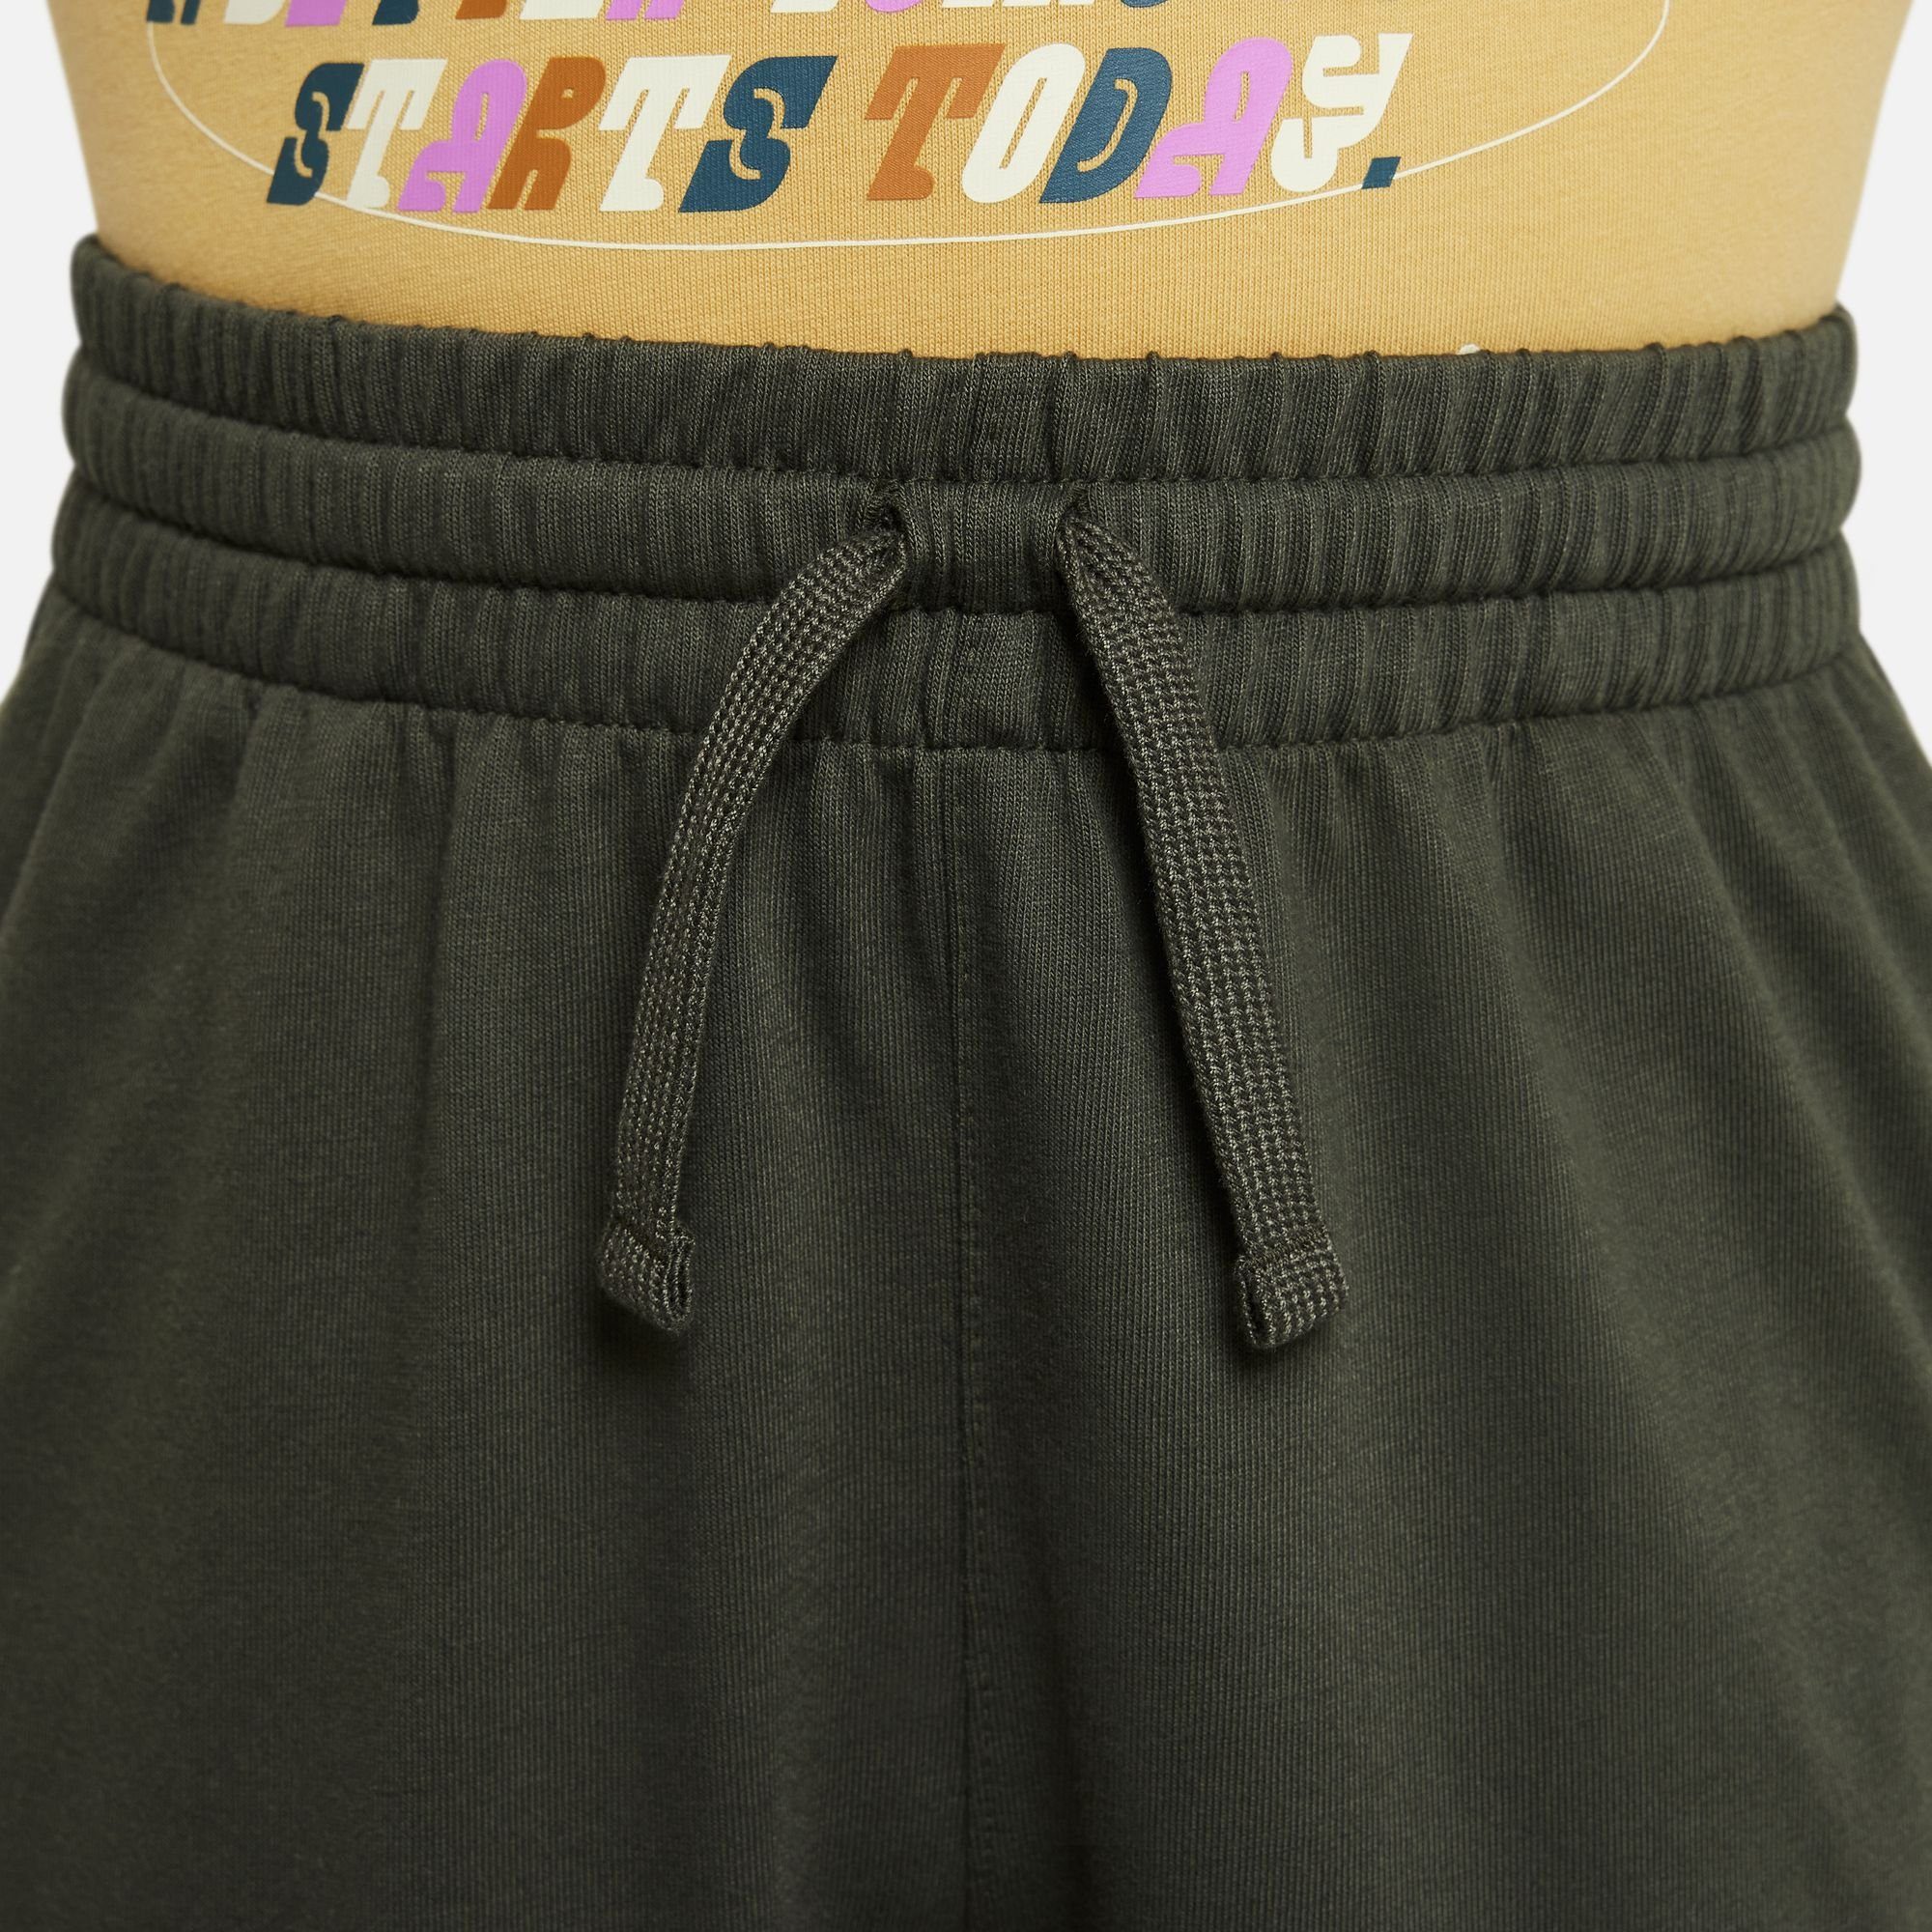 Nike Sportswear SHORTS BIG CARGO KHAKI/WHITE KIDS' (BOYS) Shorts JERSEY